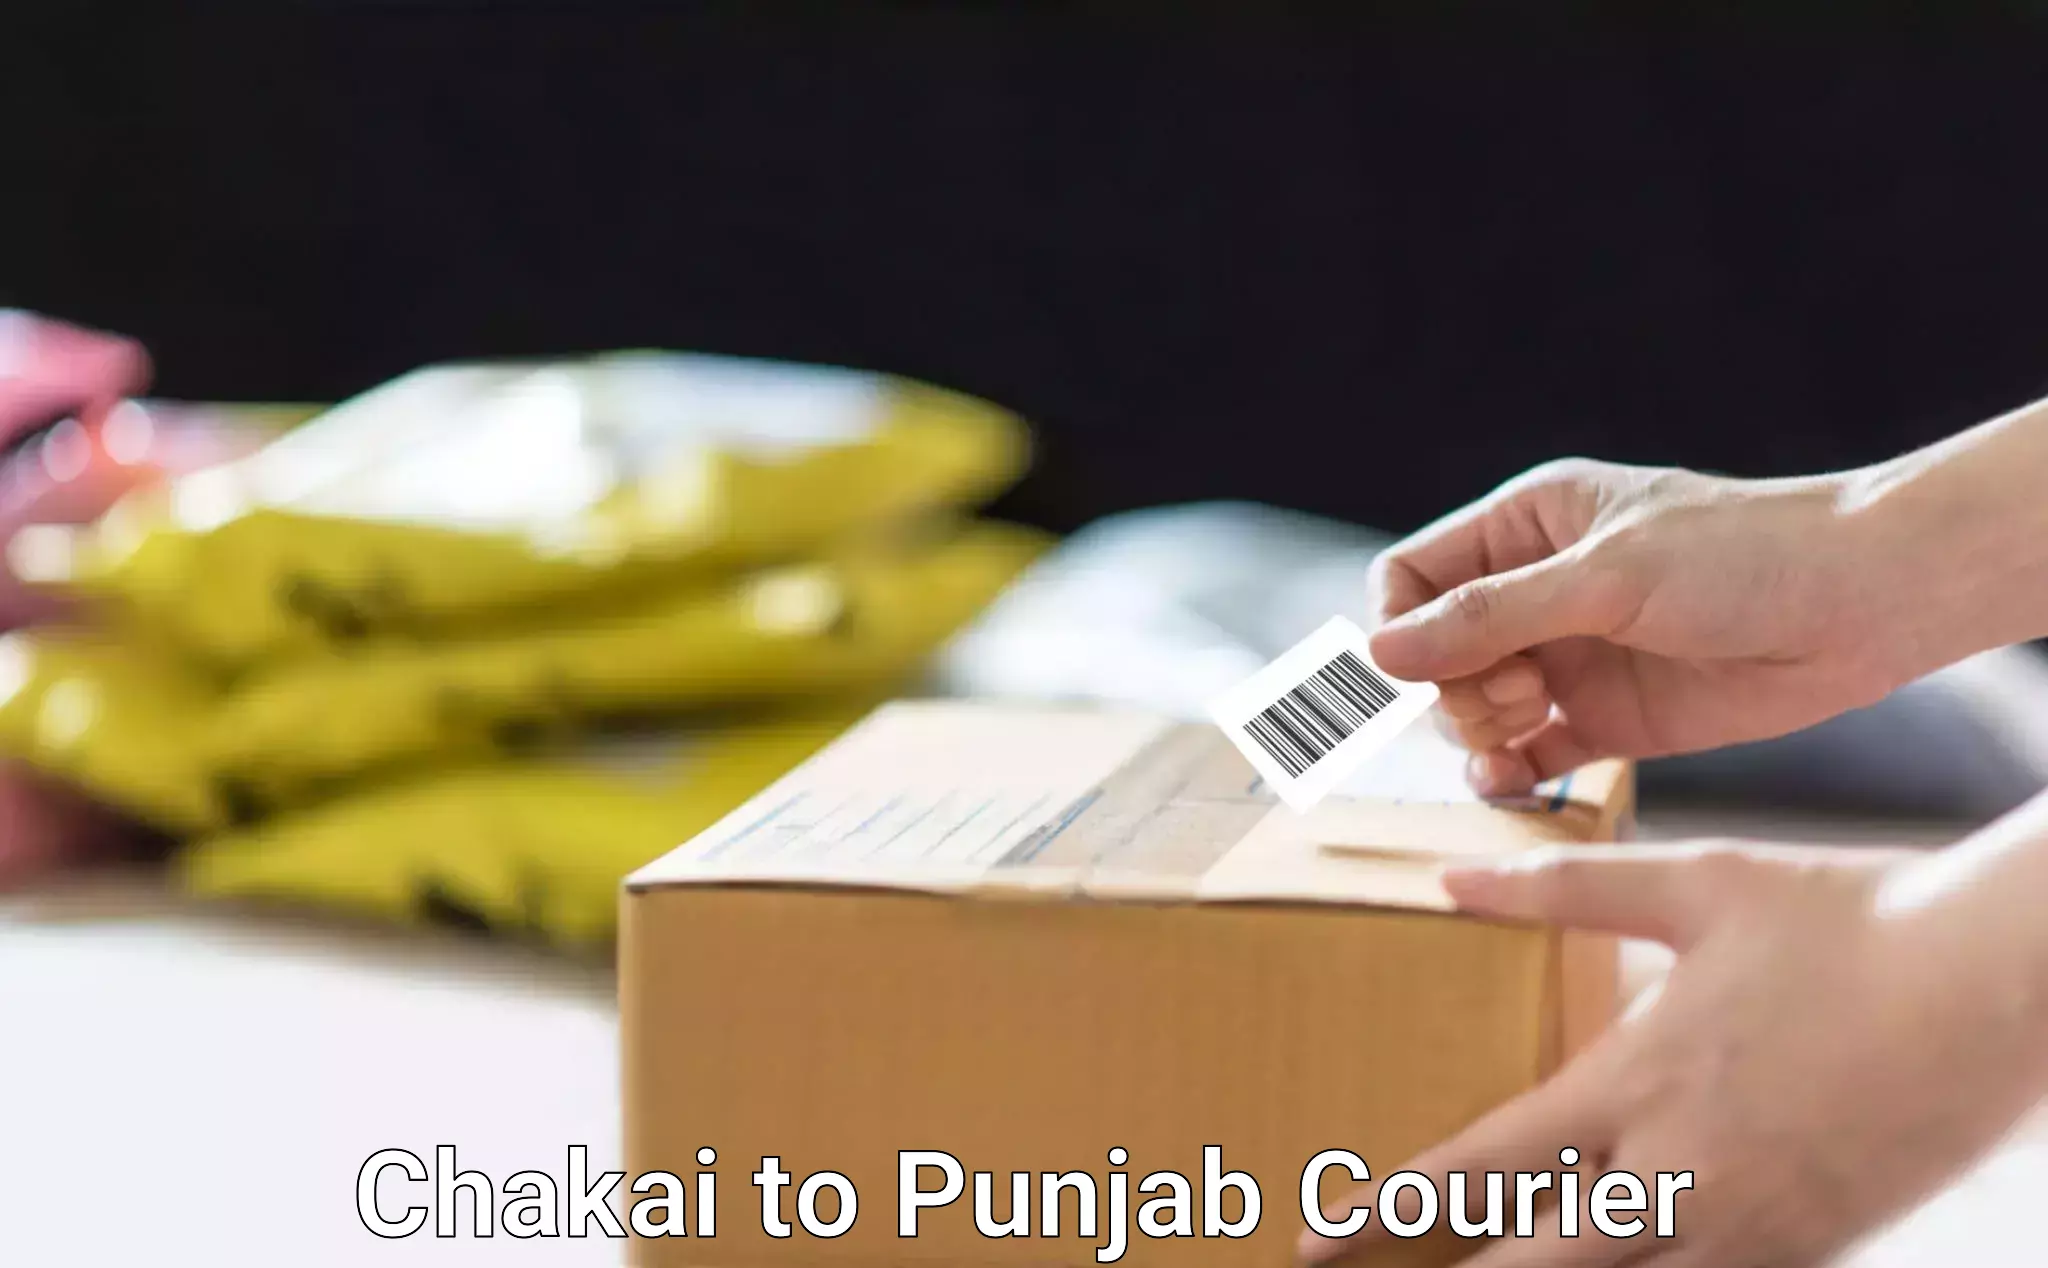 Home relocation experts Chakai to Punjab